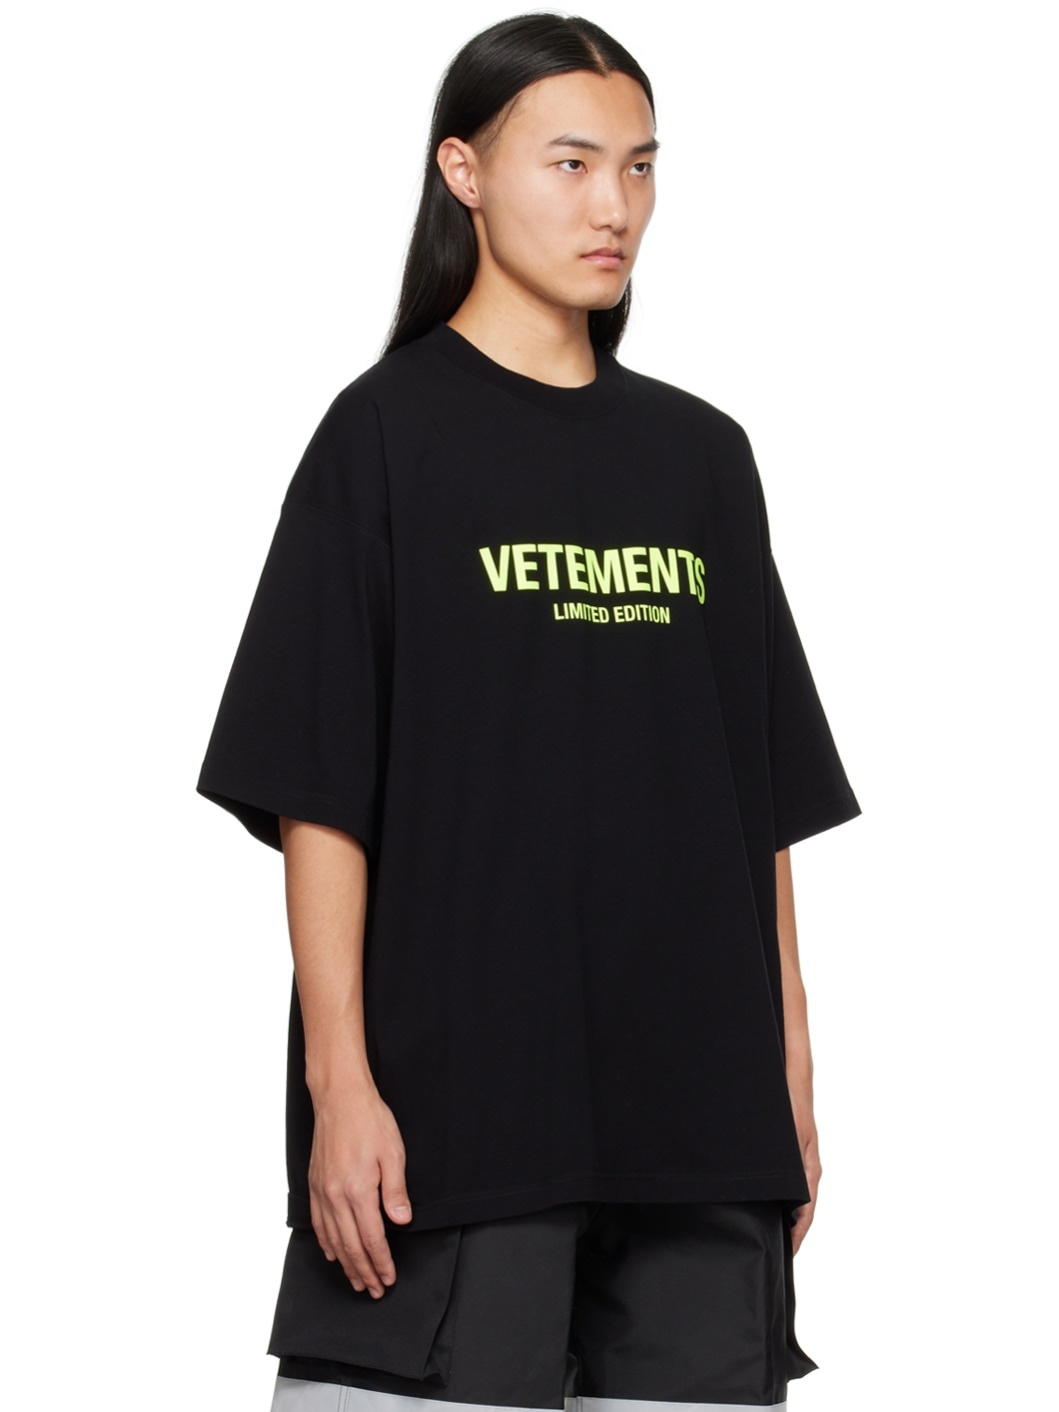 VETEMENTS Black 'Limited Edition' T-Shirt | ssense | REVERSIBLE